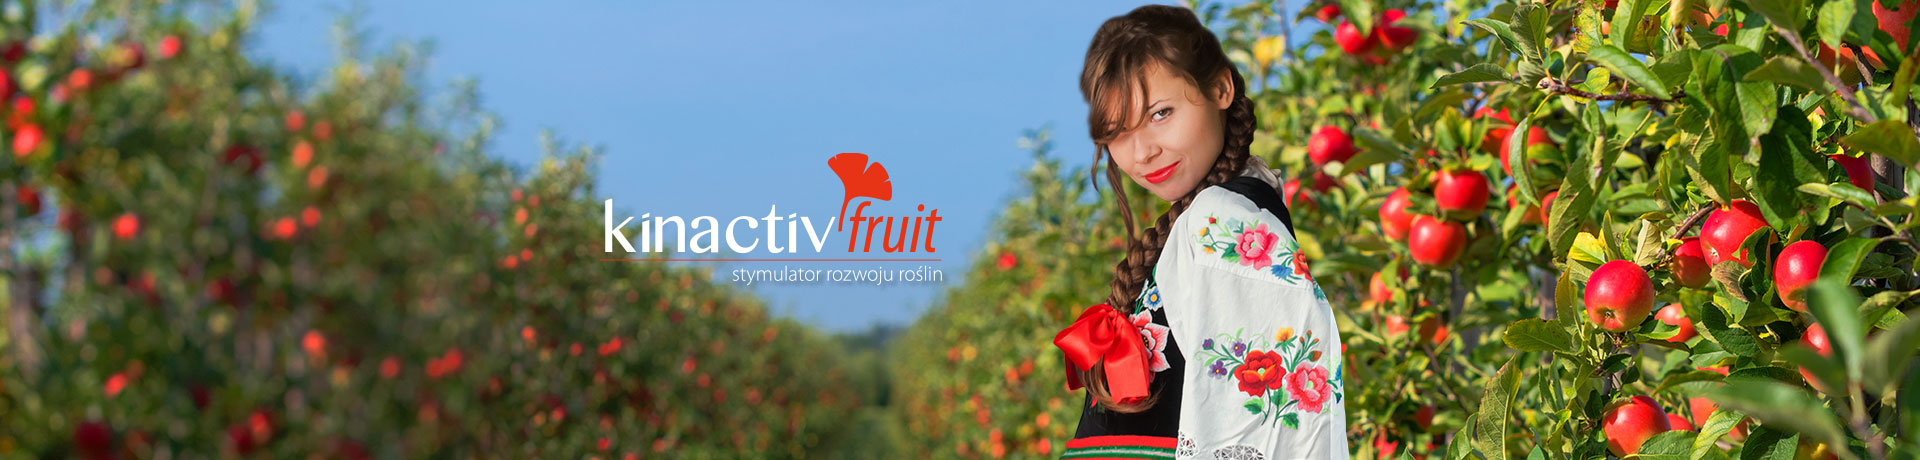 kinactiv fruit